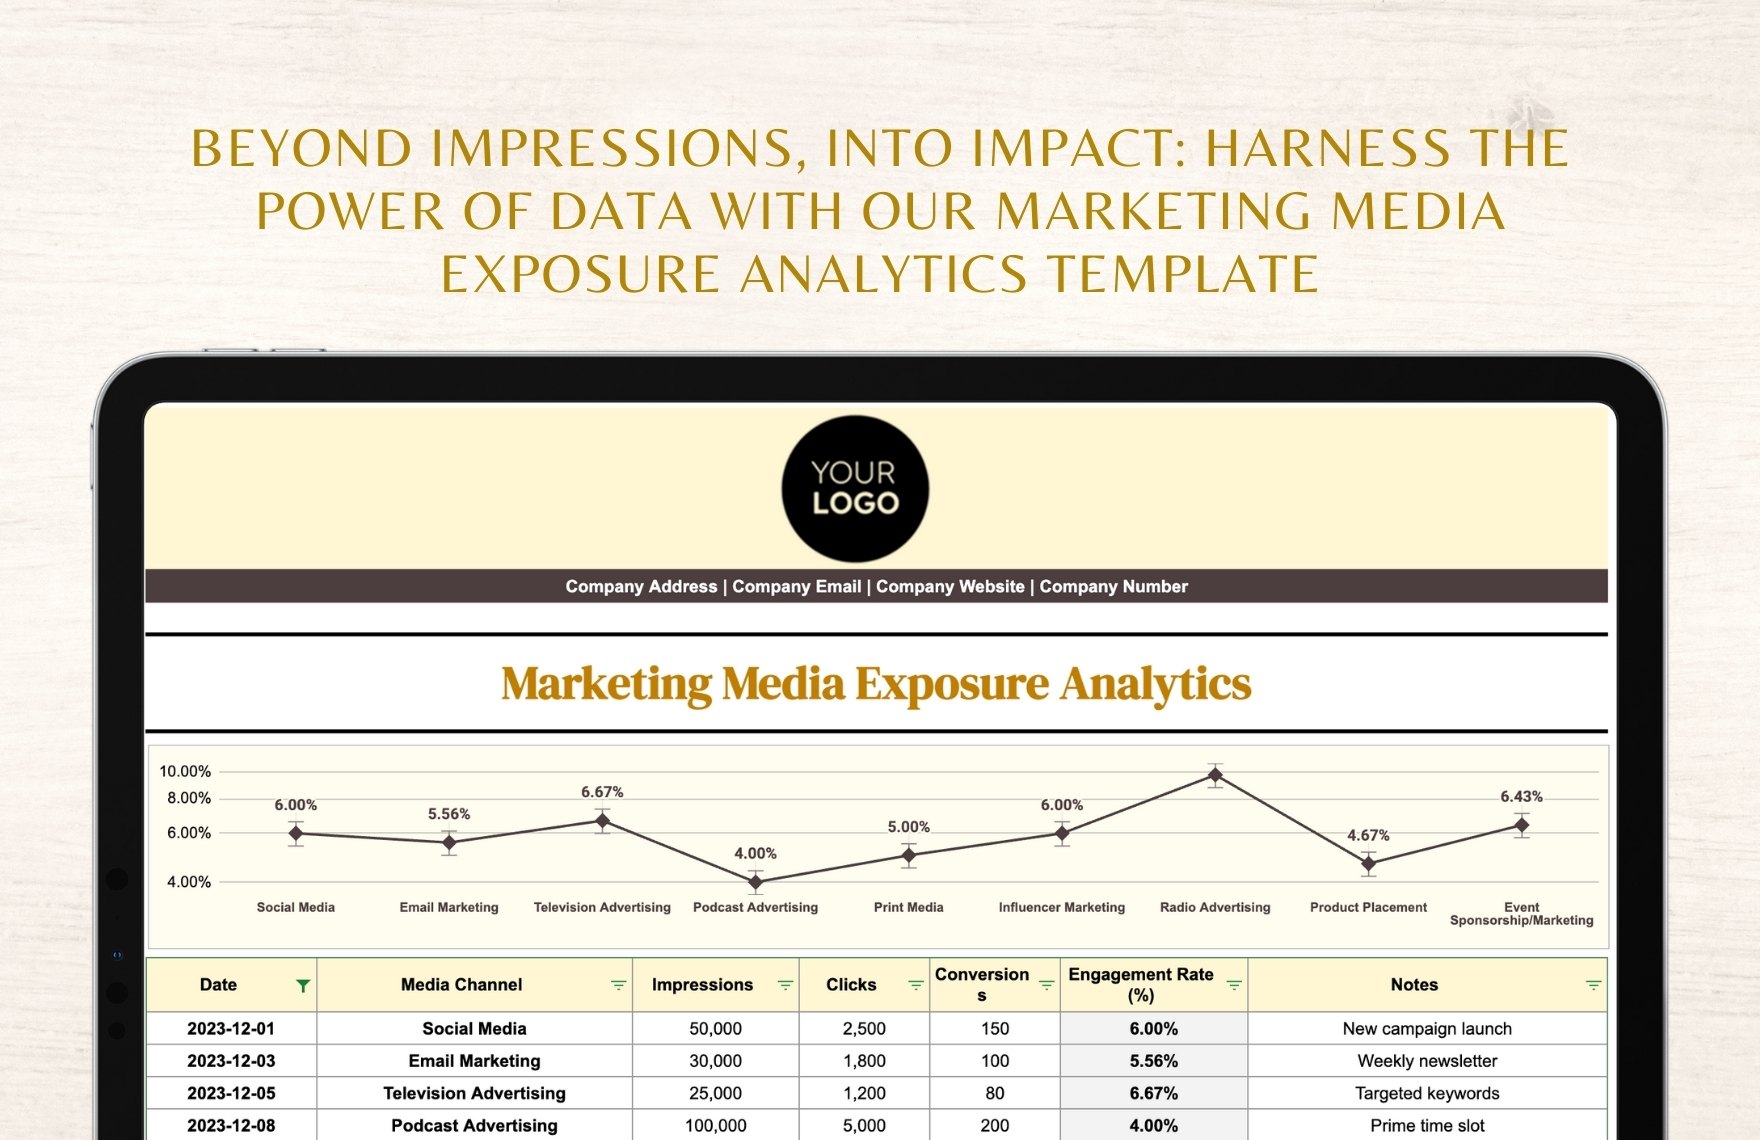 Marketing Media Exposure Analytics Template